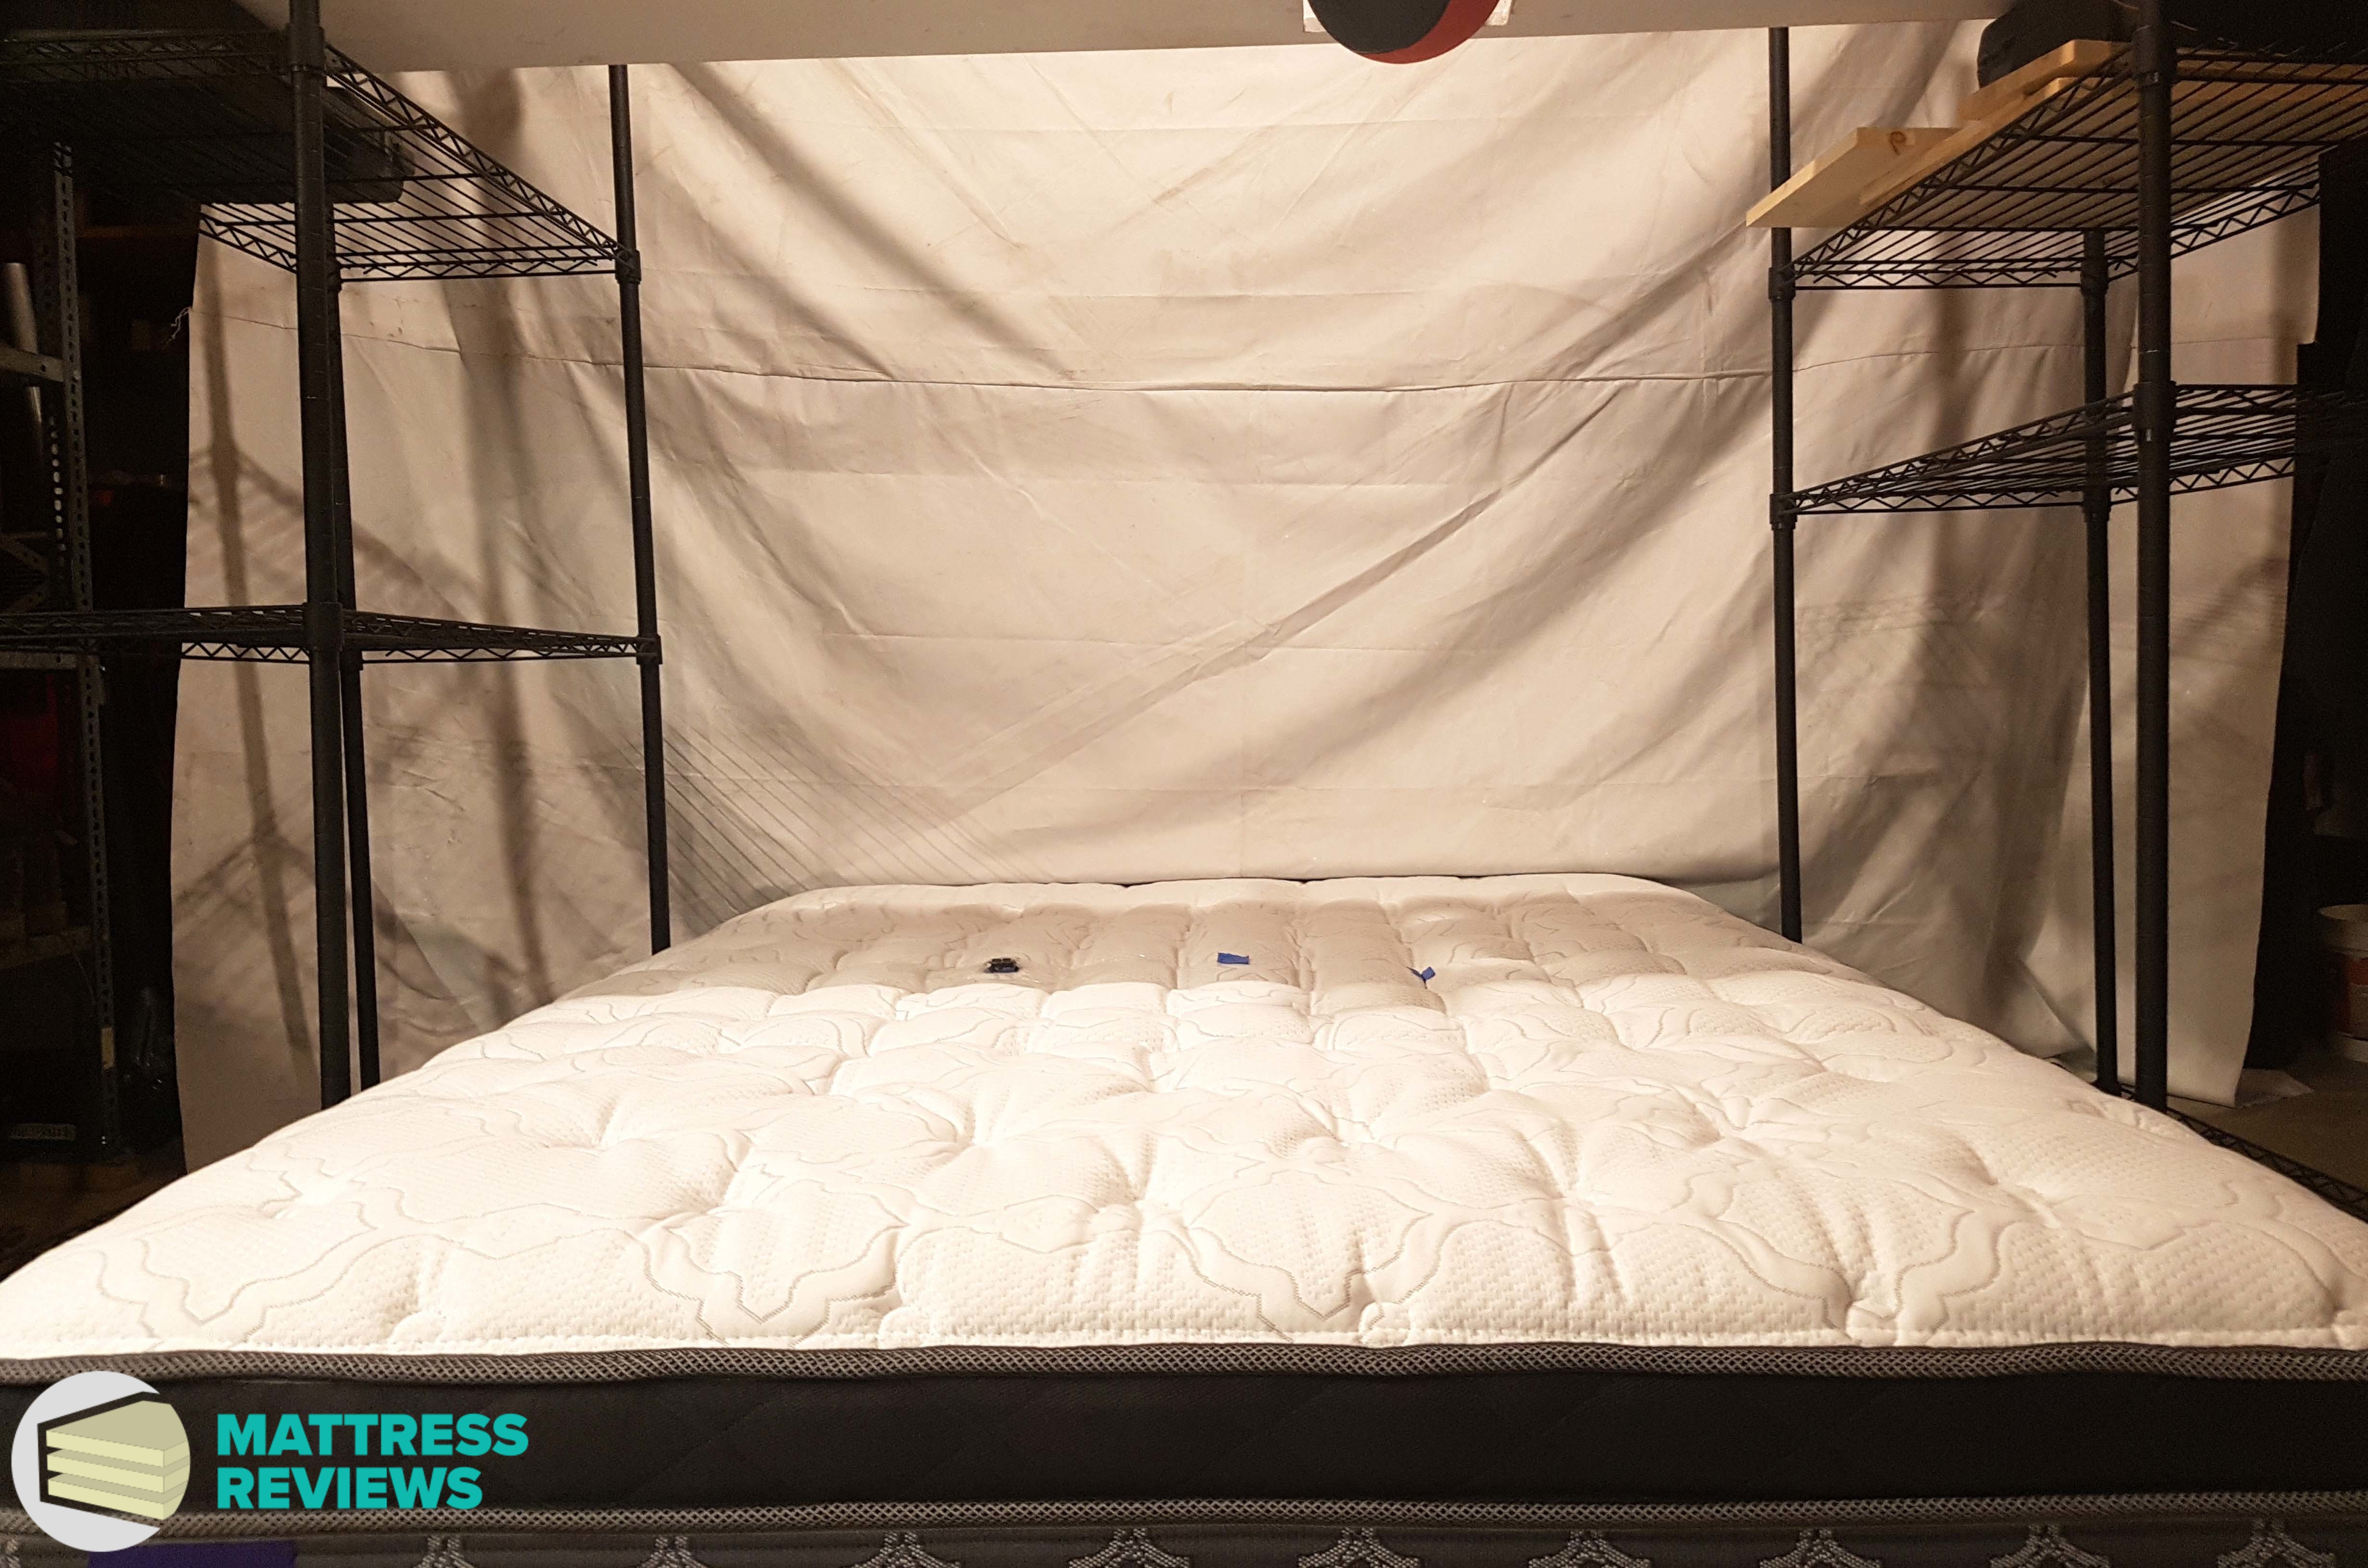 Image of the Sealy Posturepedic mattress motion isolation test.